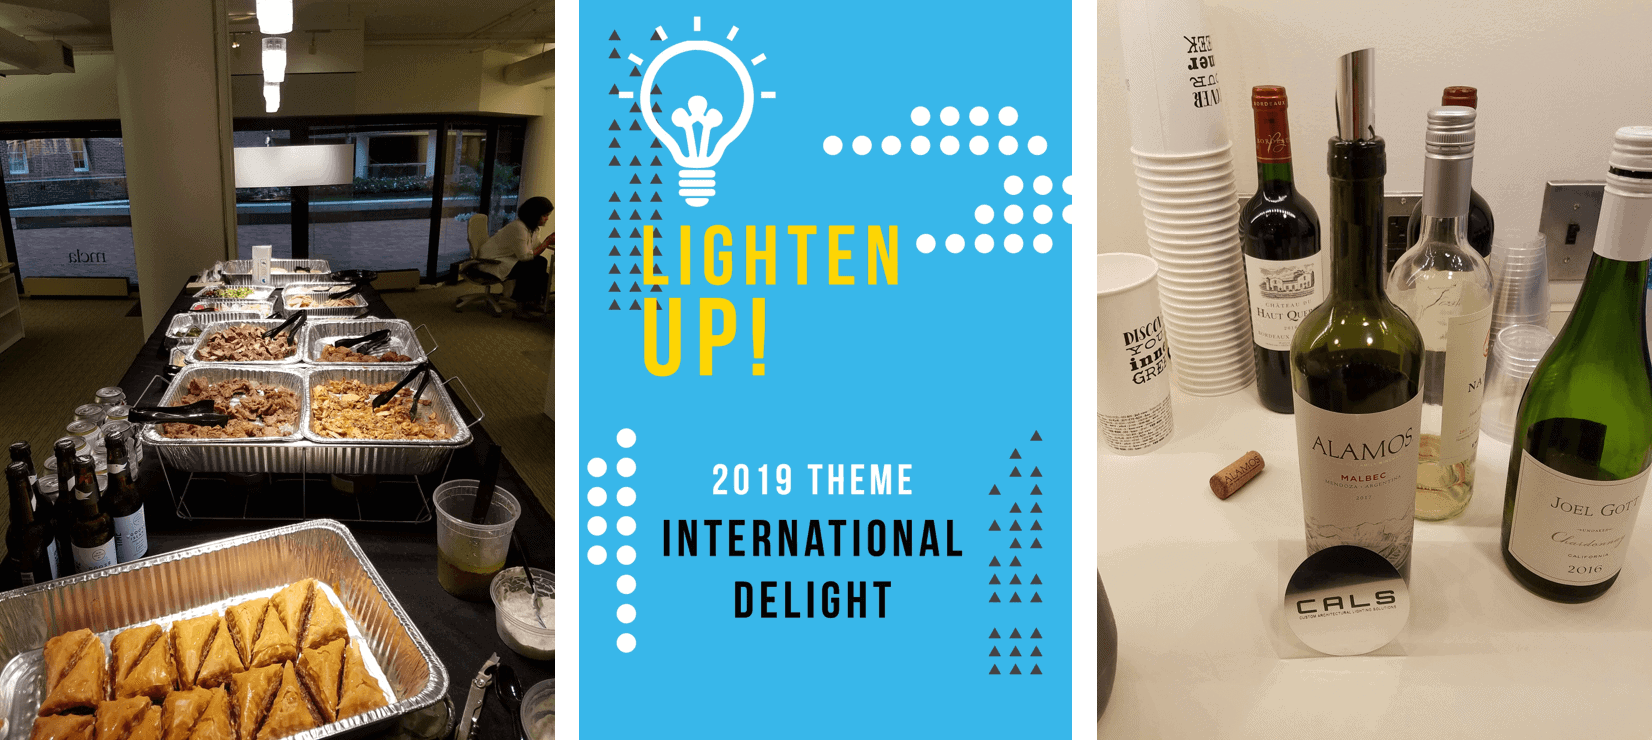 food and beverages at Lighten Up! 2019 design competition